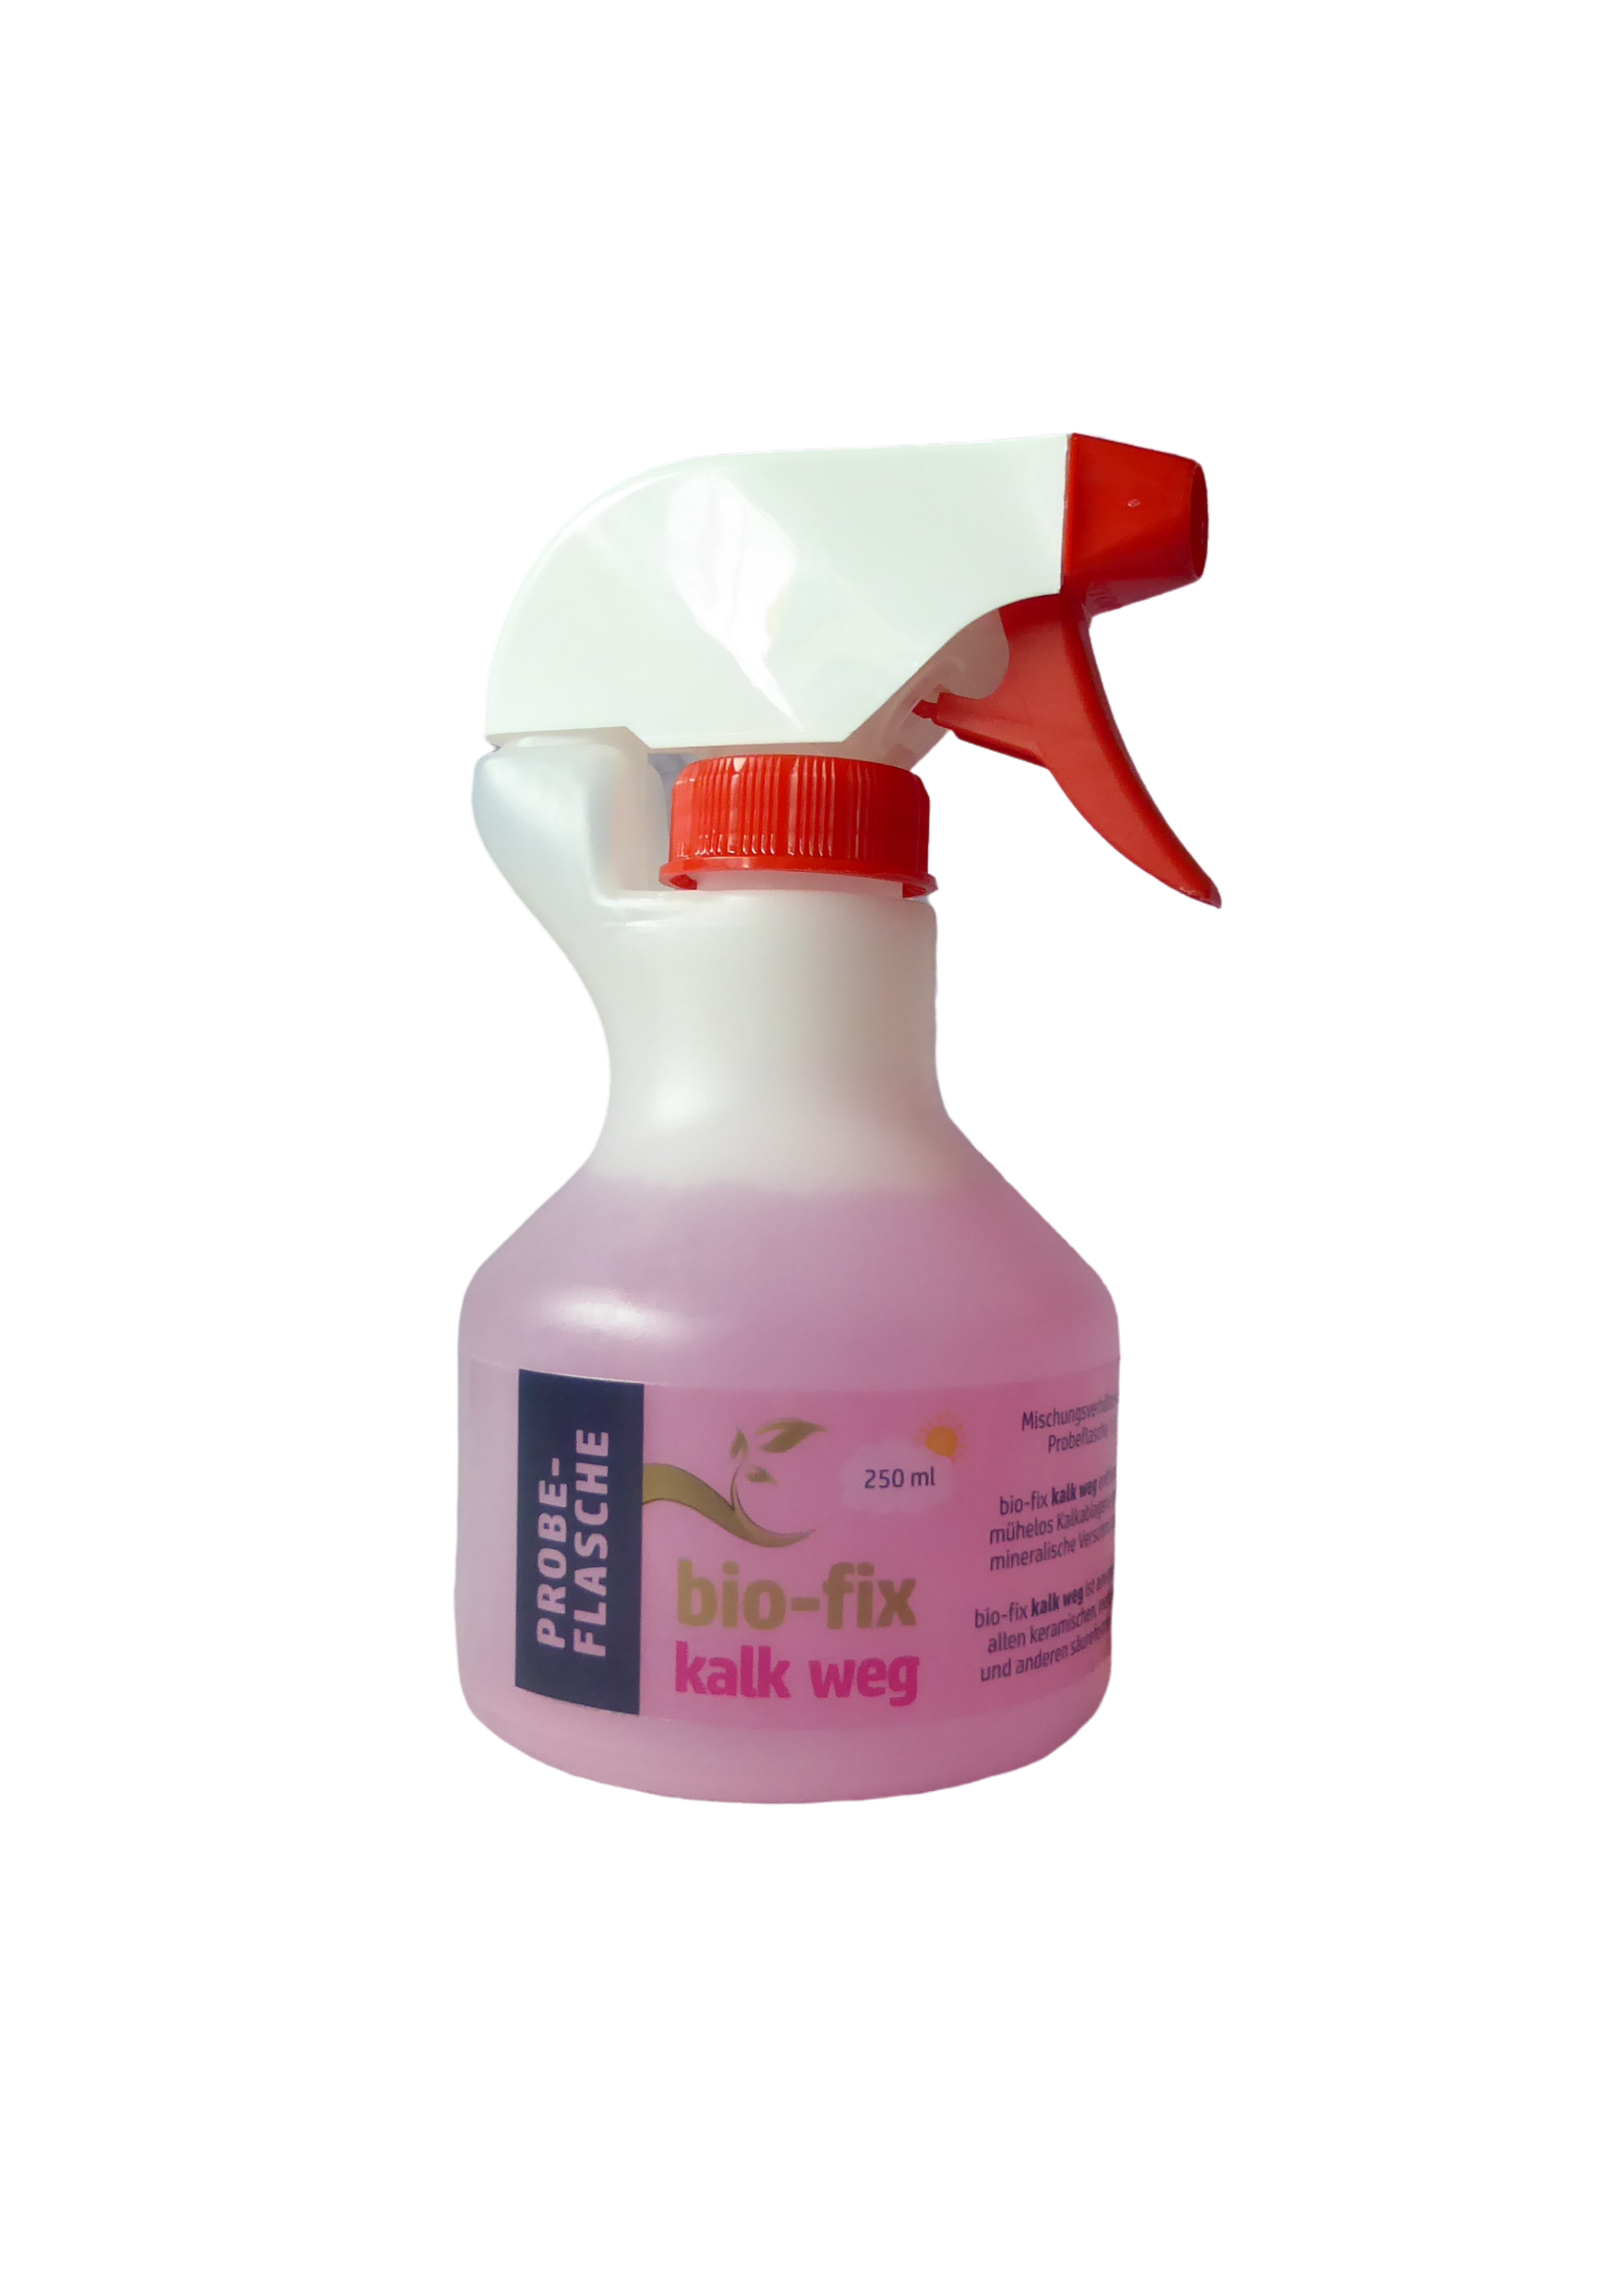 bio-fix kalk weg: Probeflasche